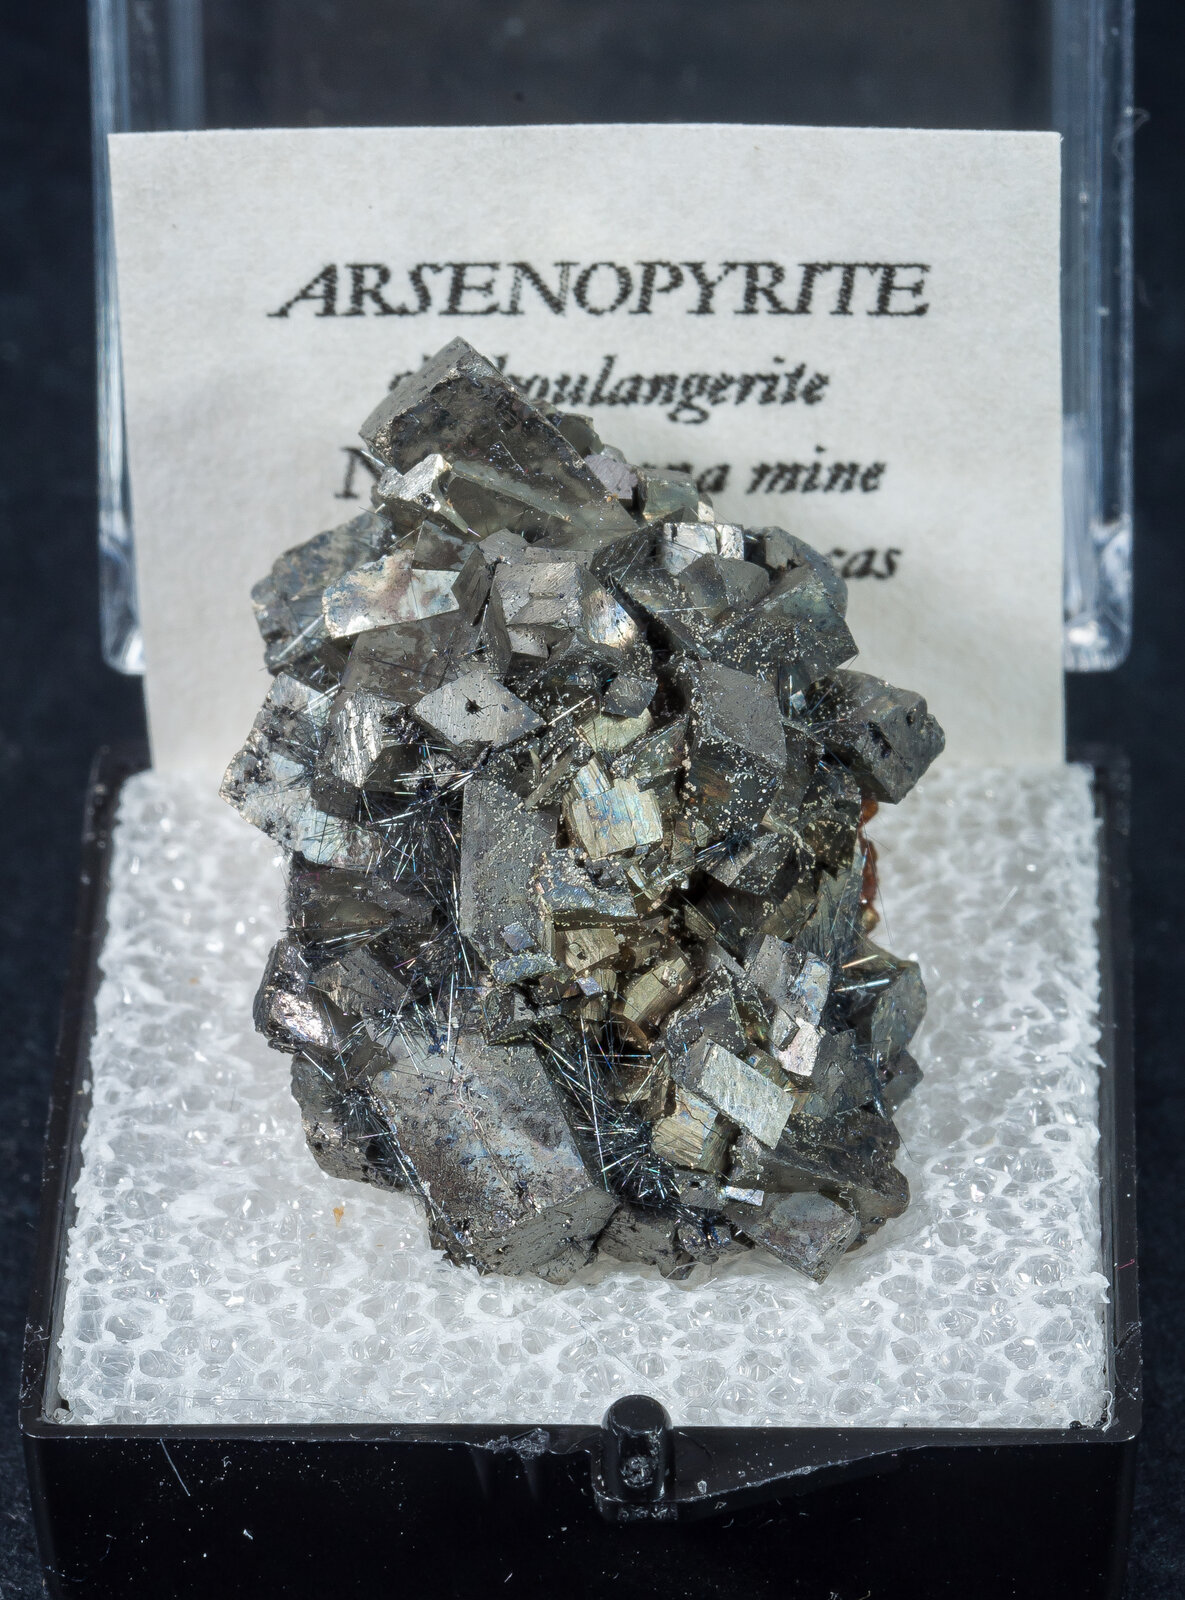 specimens/s_imagesAN2/Arsenopyrite-TG14AN2f1.jpg